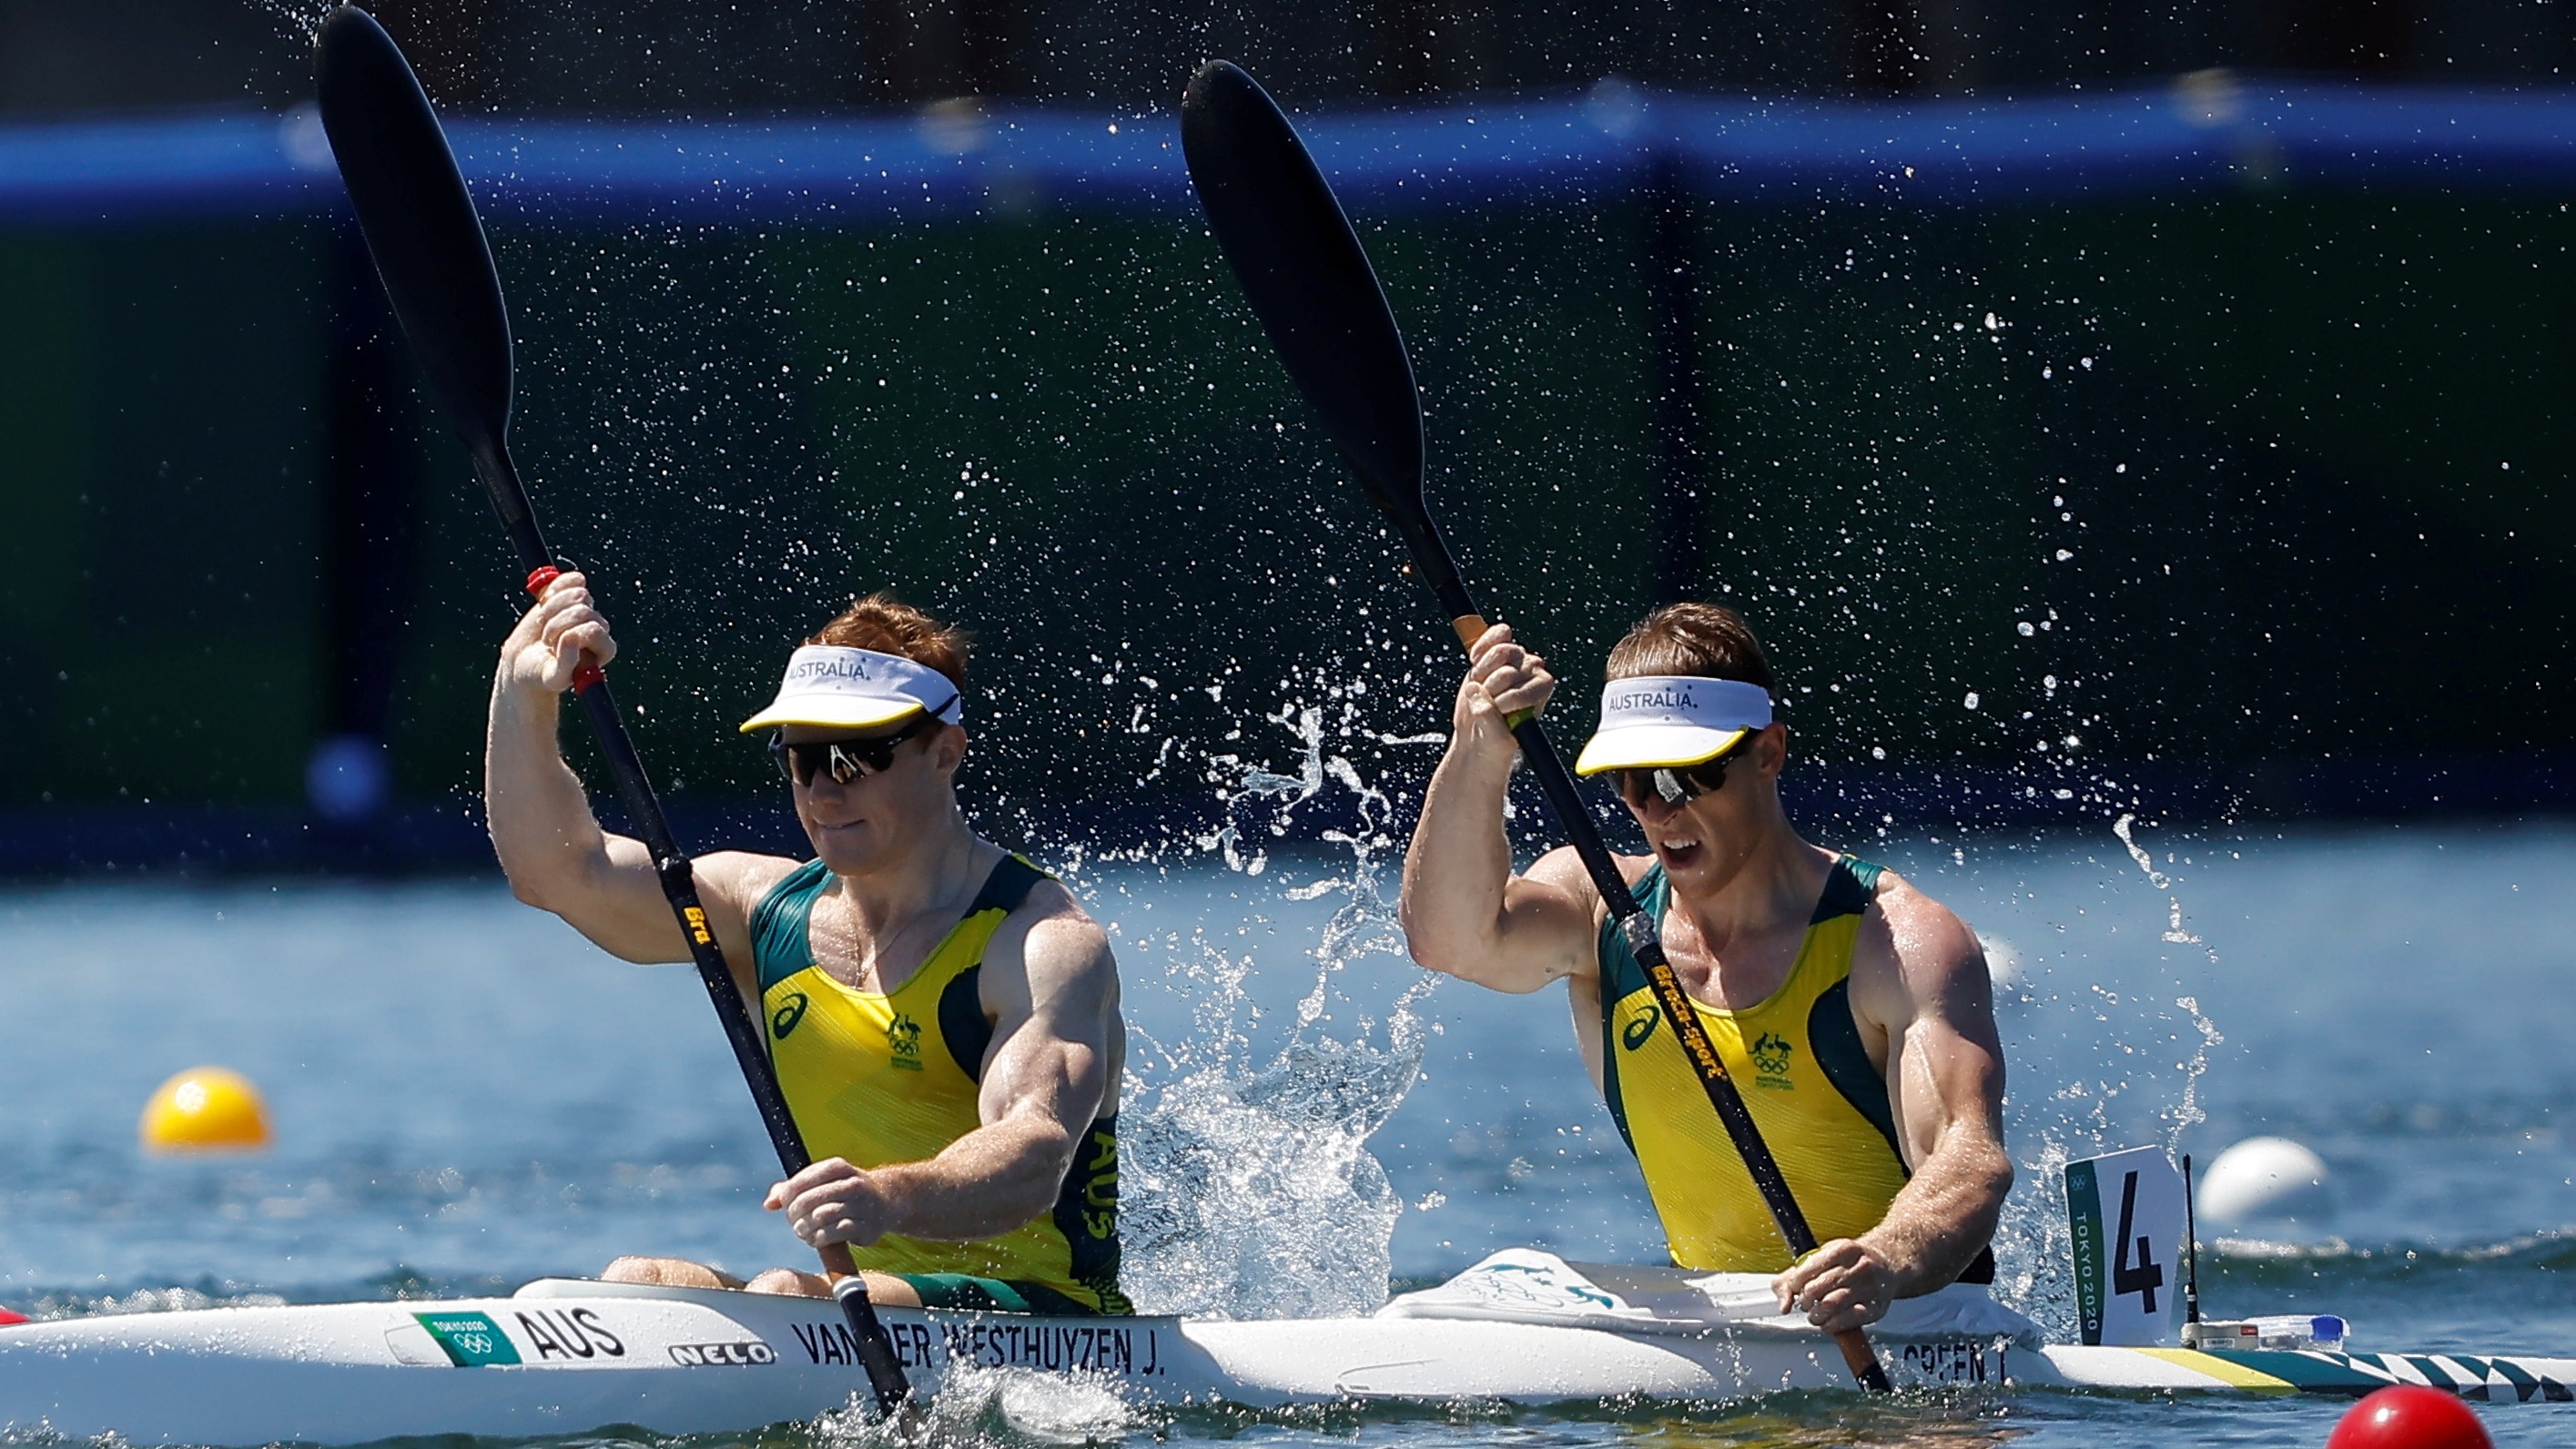 Canoe sprint-Australia win men's kayak double 1000m gold